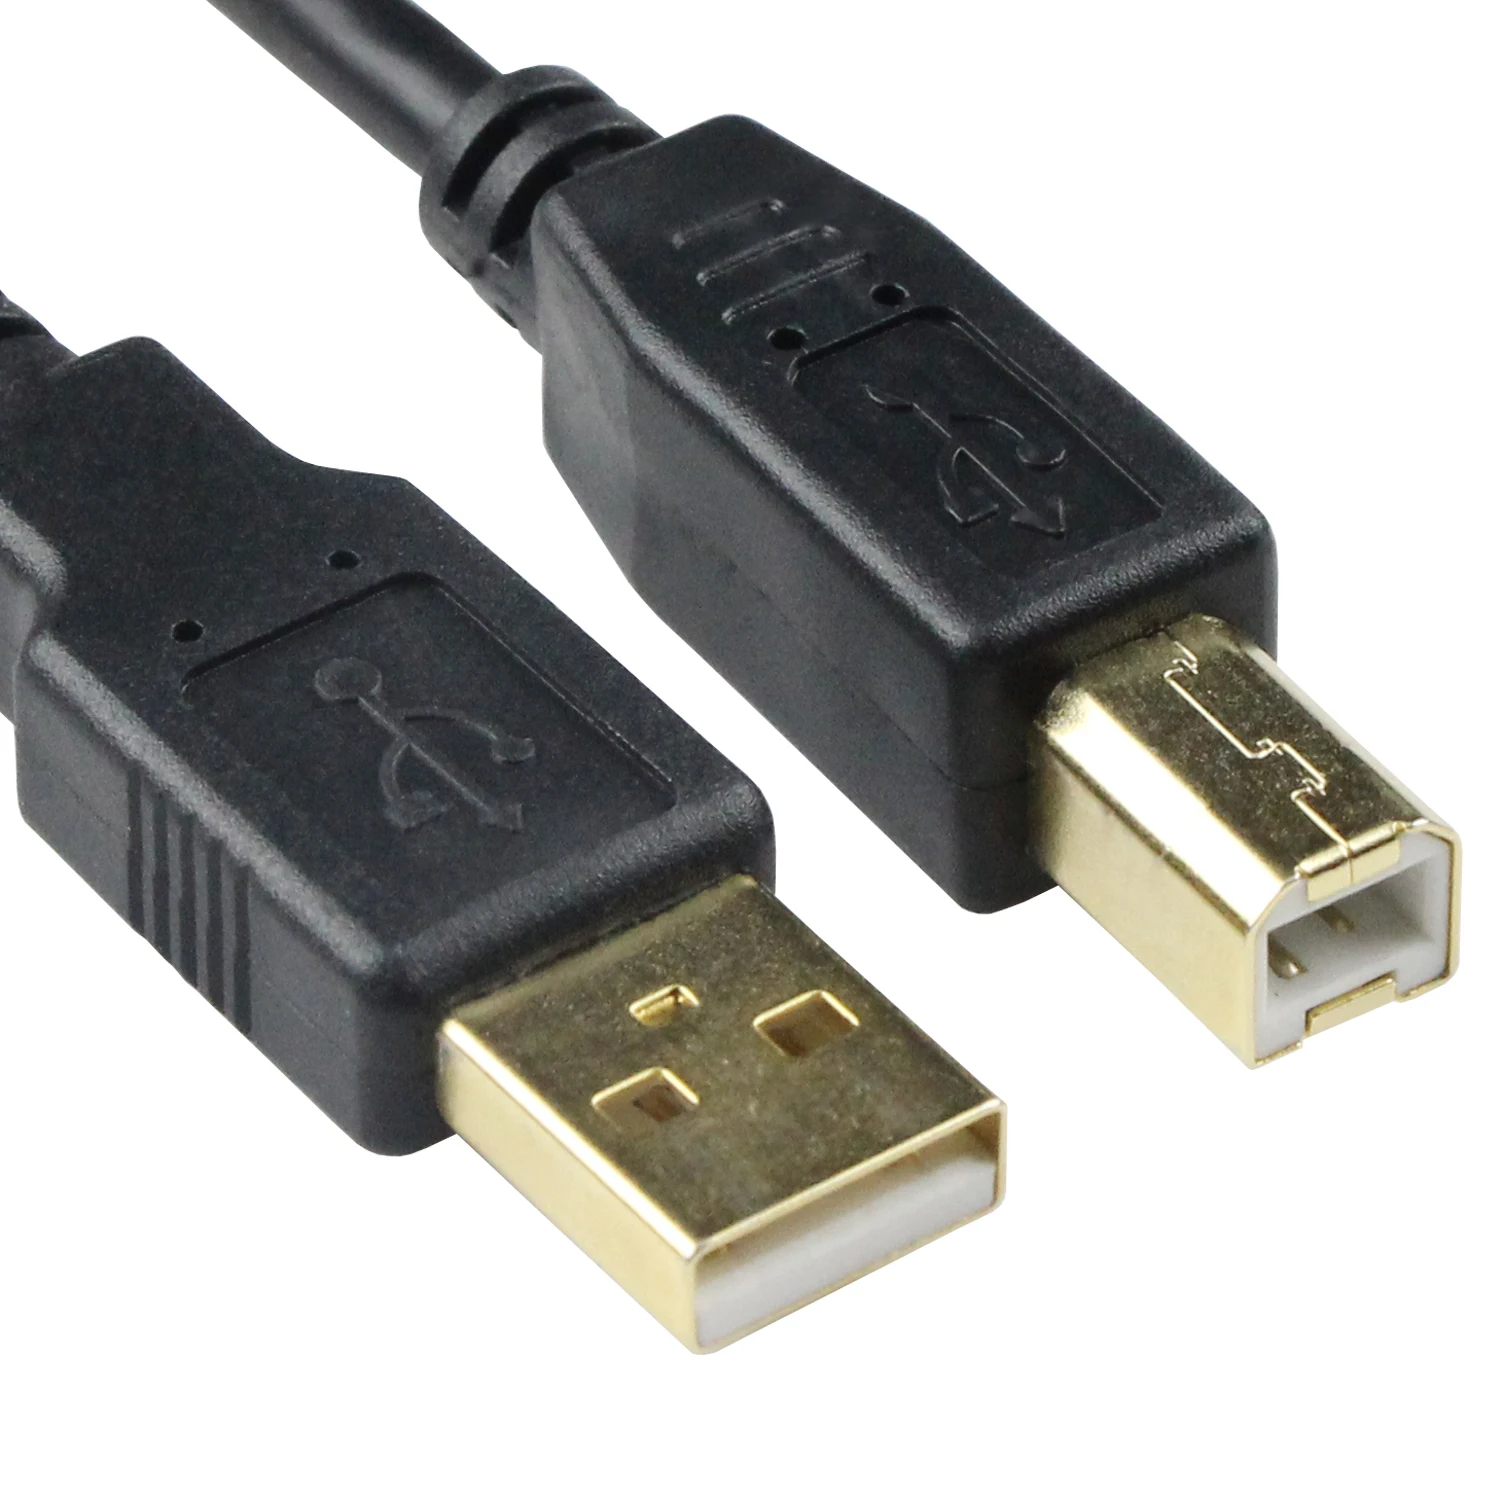 

VCOM manufacturer 2.0V gold plated USB AM to BM printer cables